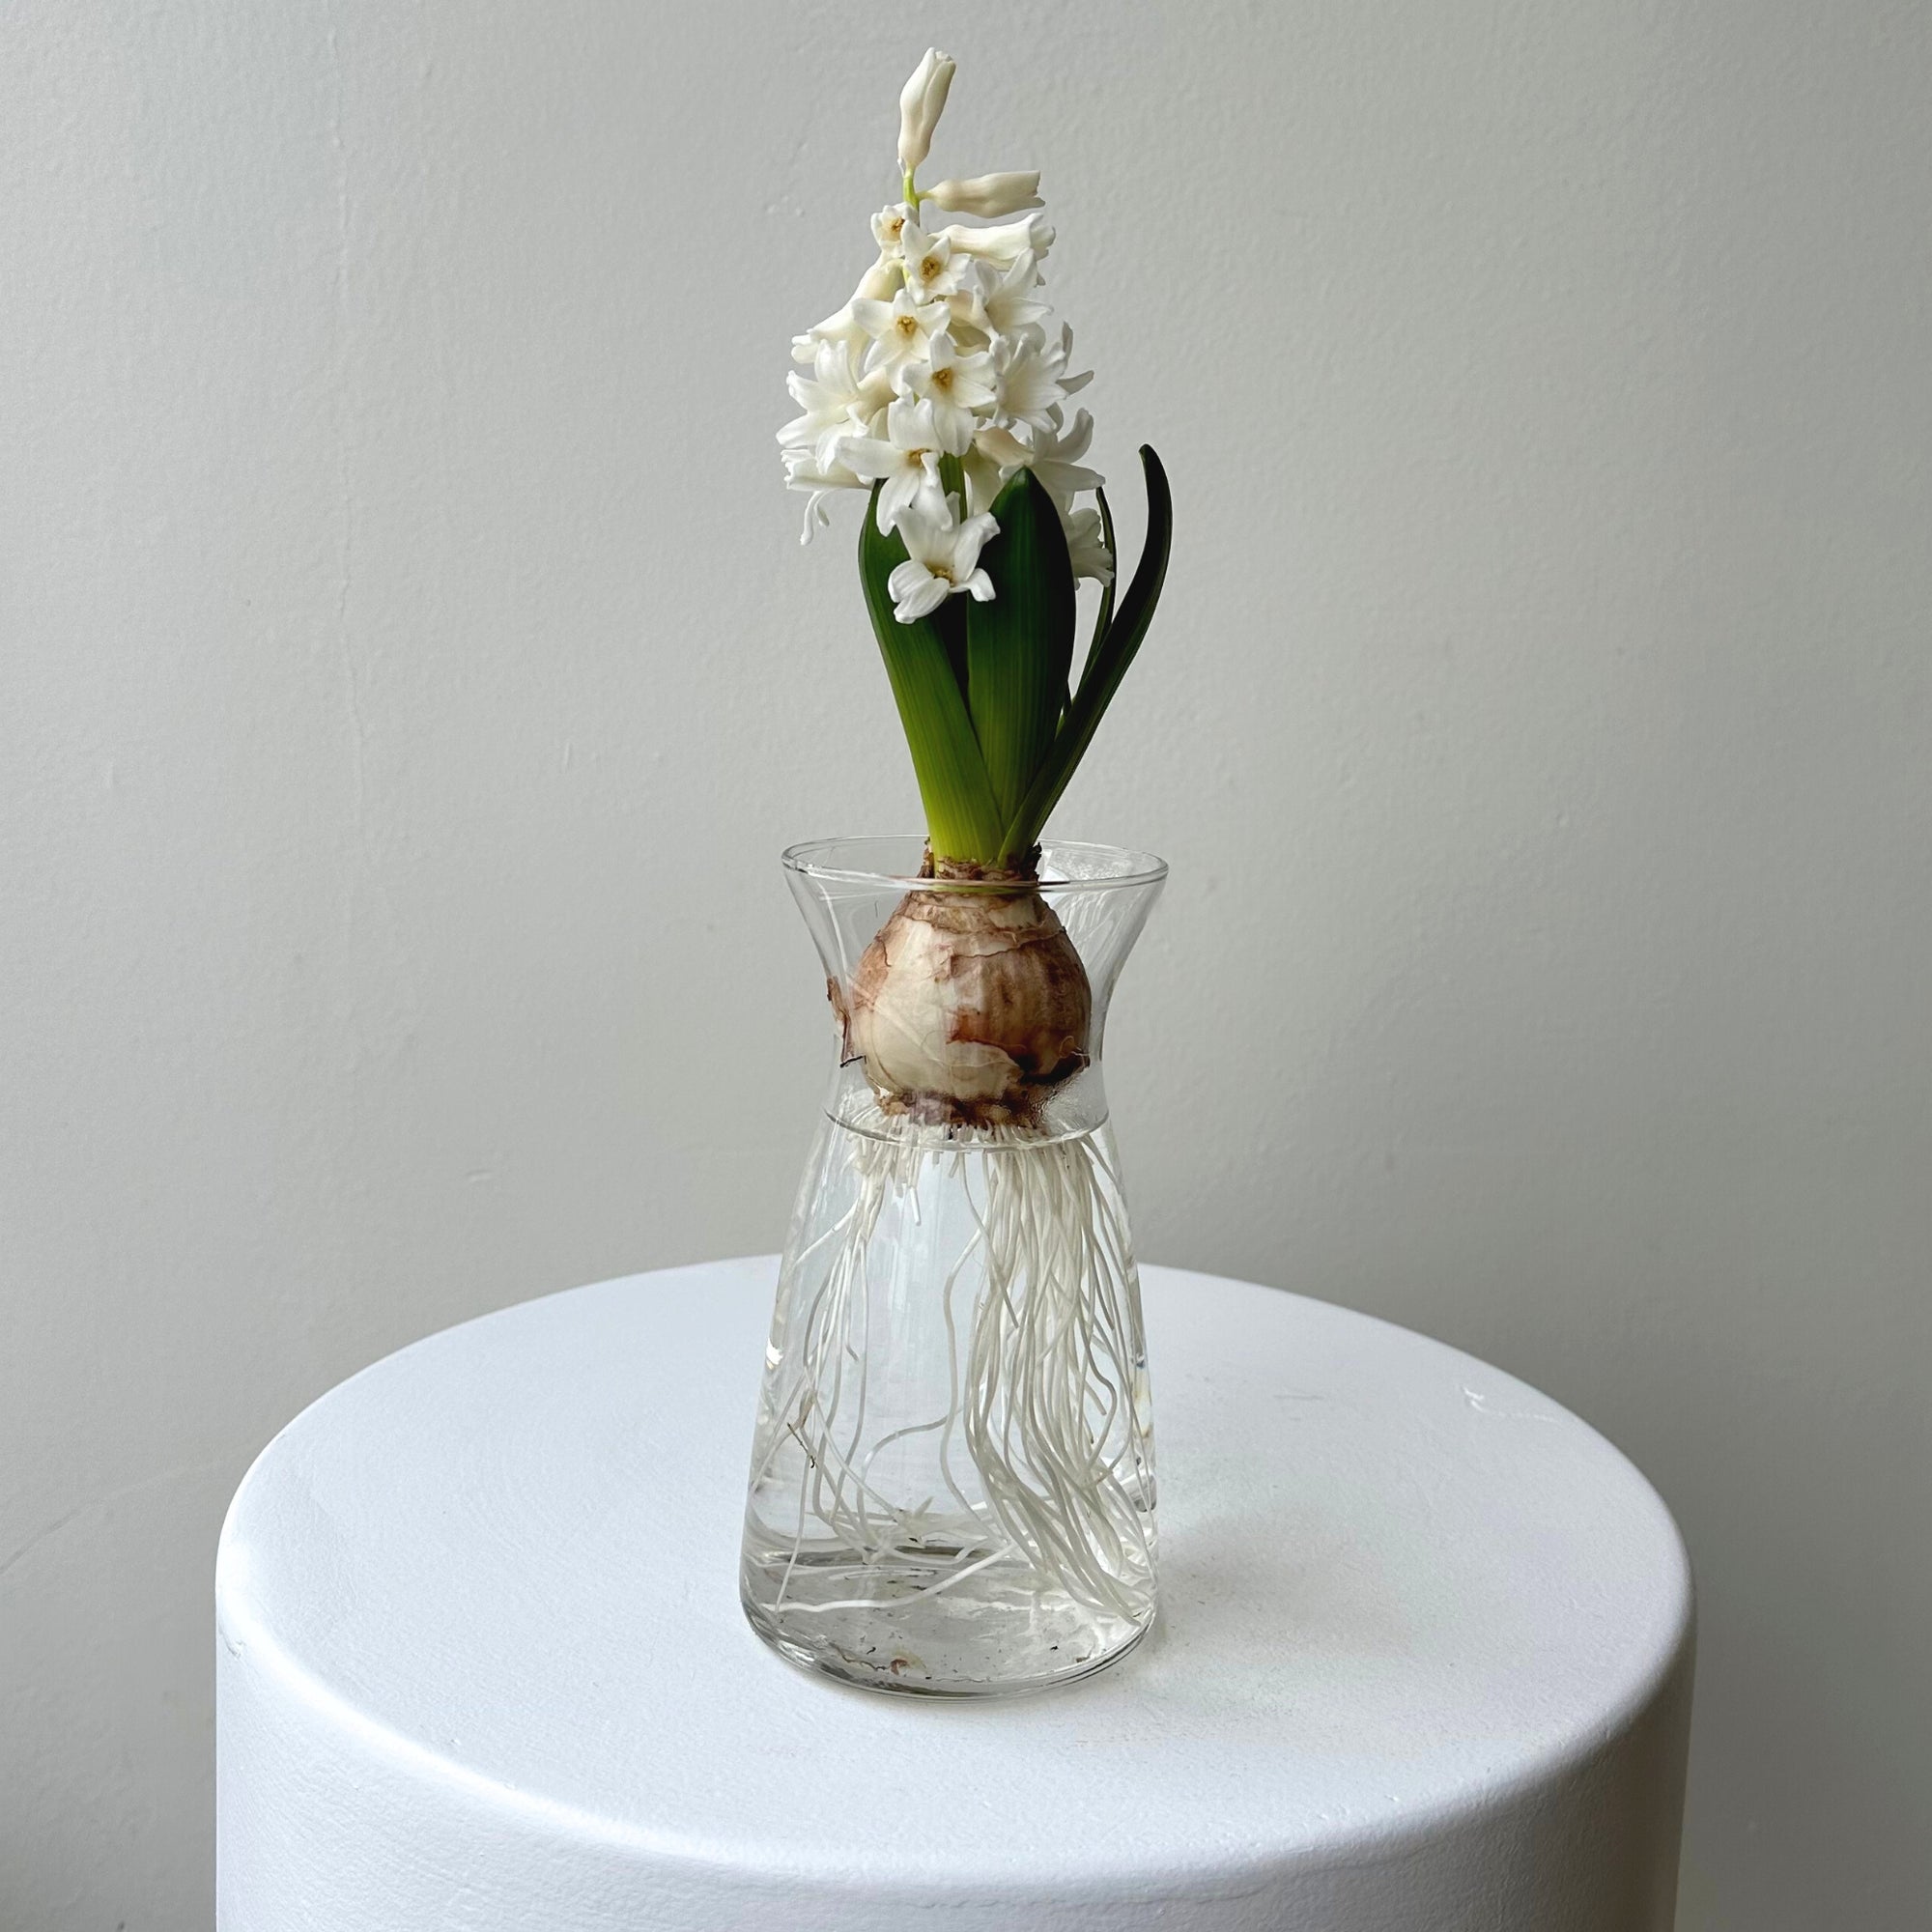 Hyacinth Bulb in Vase